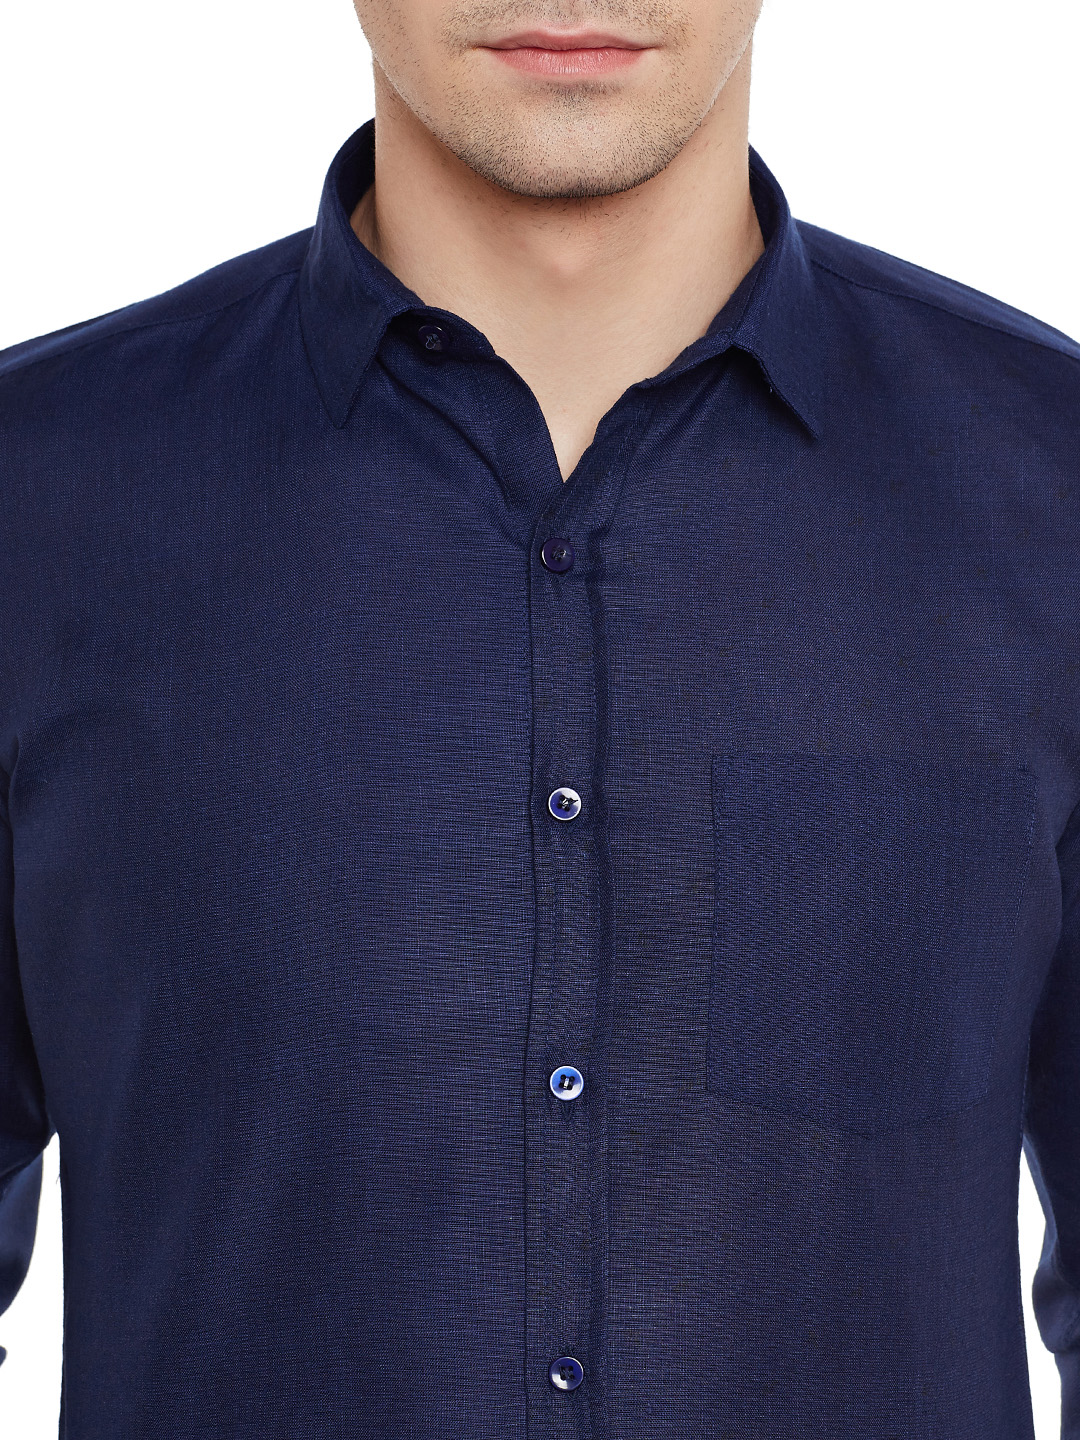 Buy Doora Mens Navy Blue Formal Shirts Online @ ₹399 from ShopClues